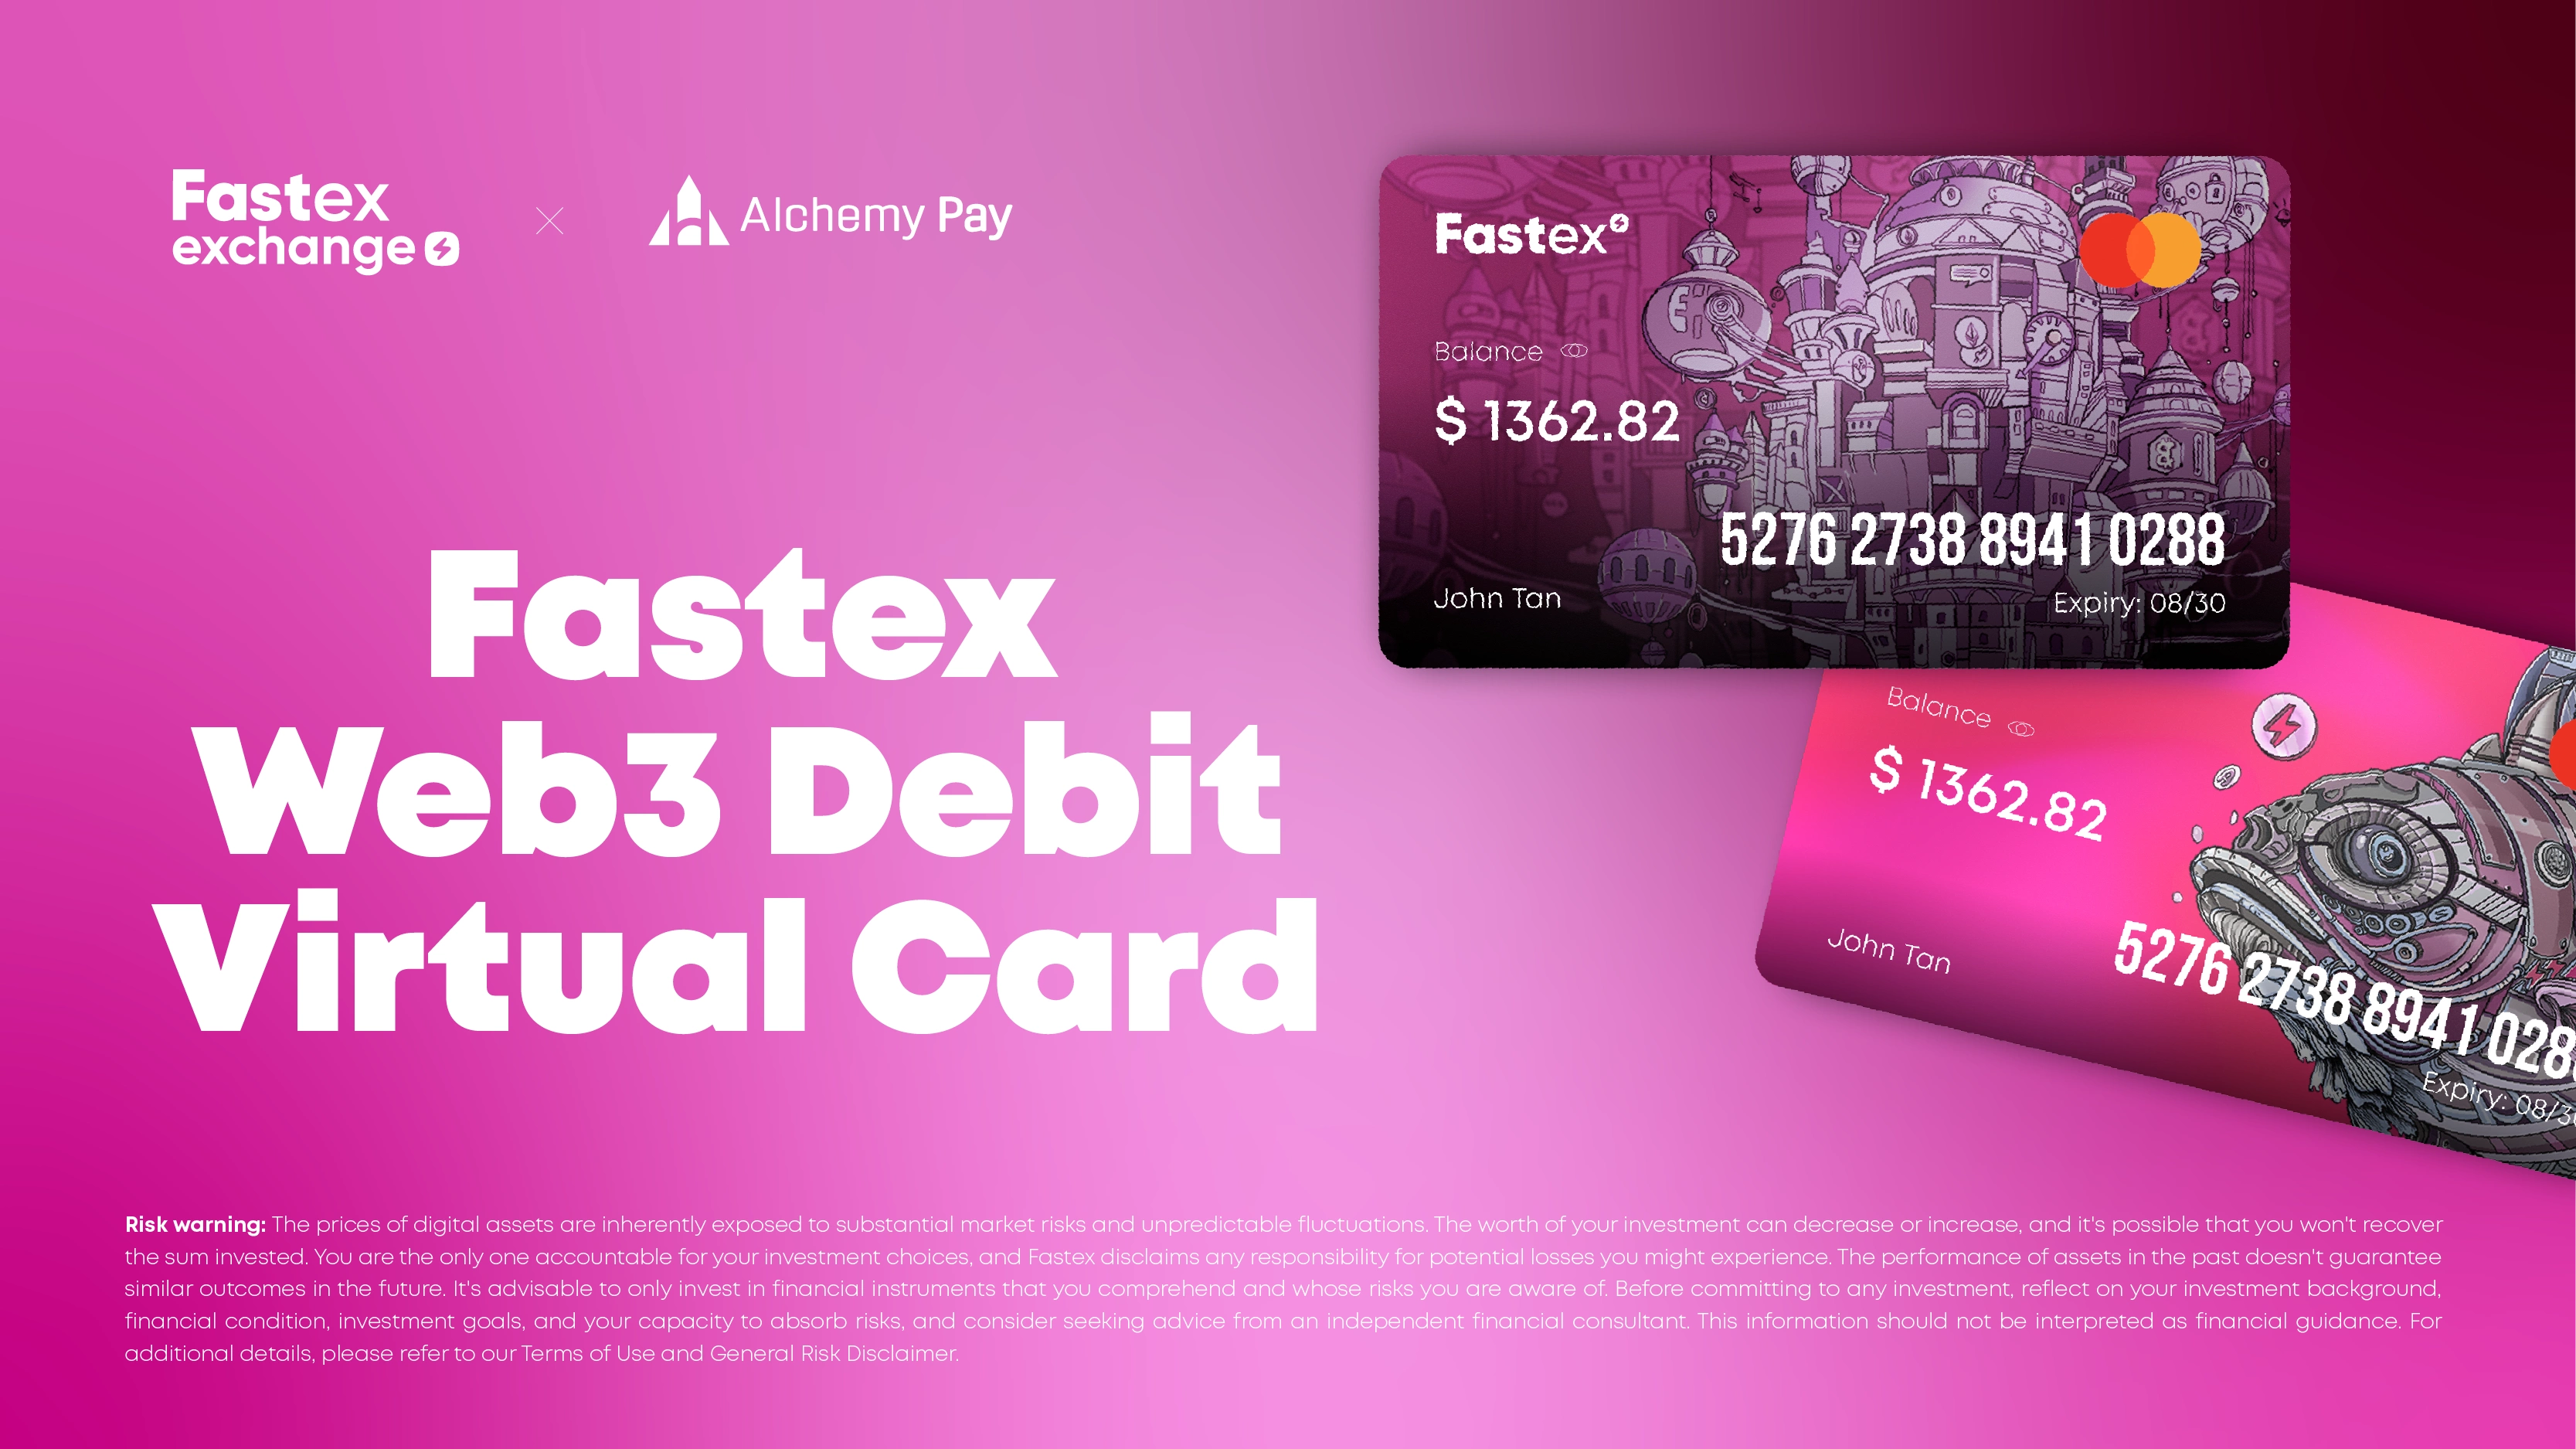 Fastex Launches Web3 Debit Virtual Card